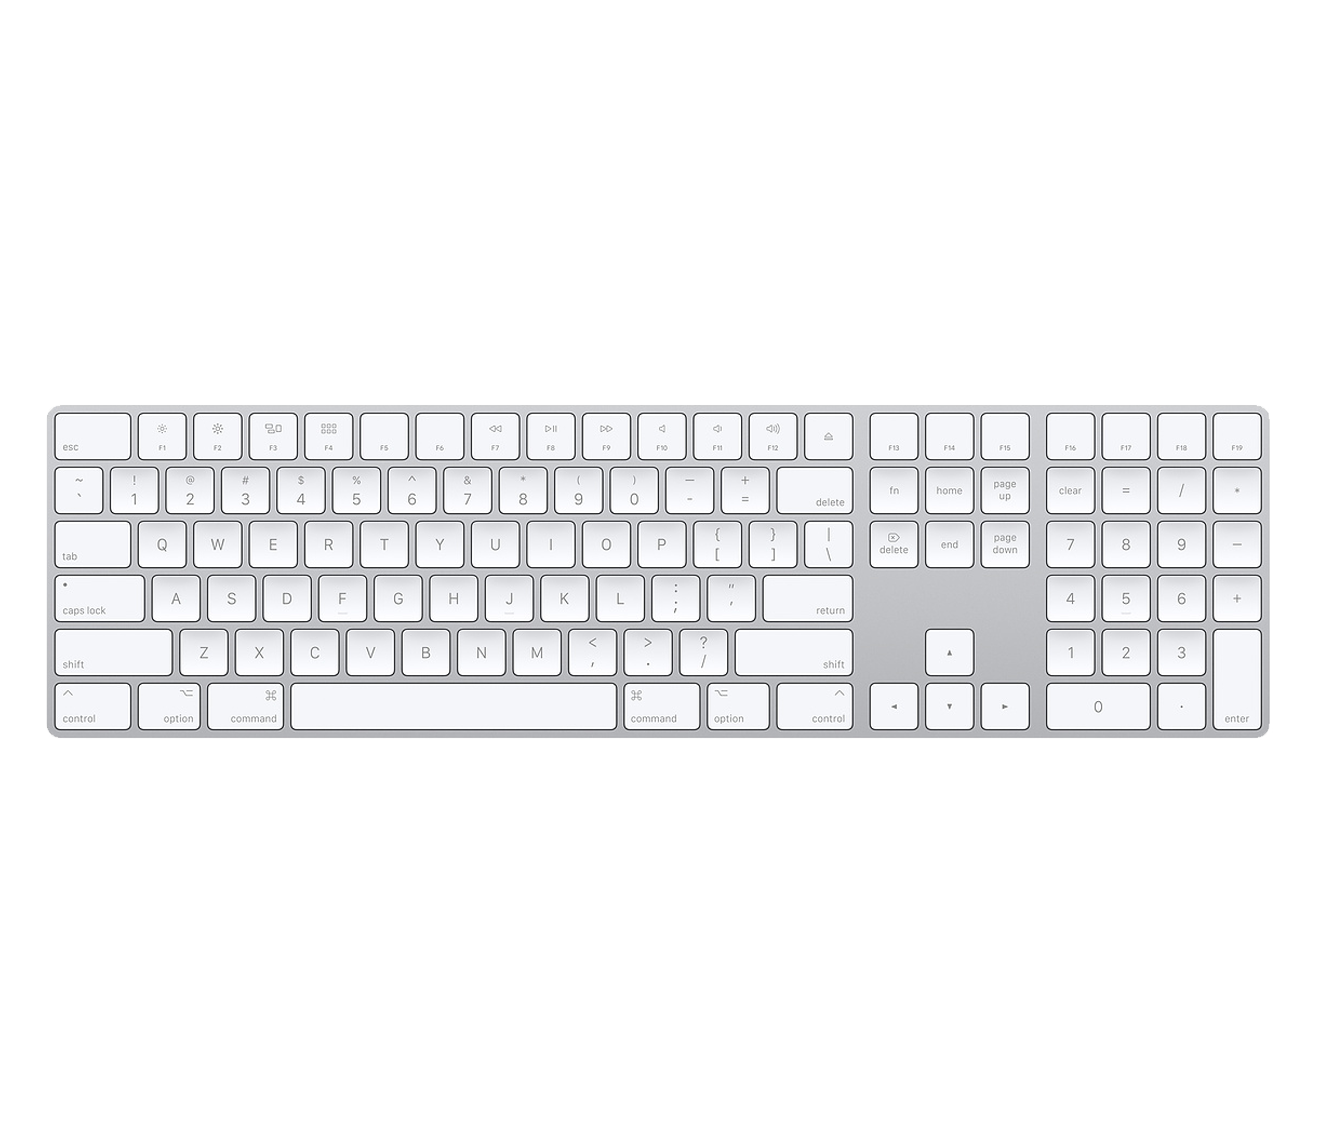 Apple Magic Keyboard with Numeric Keypad - US English